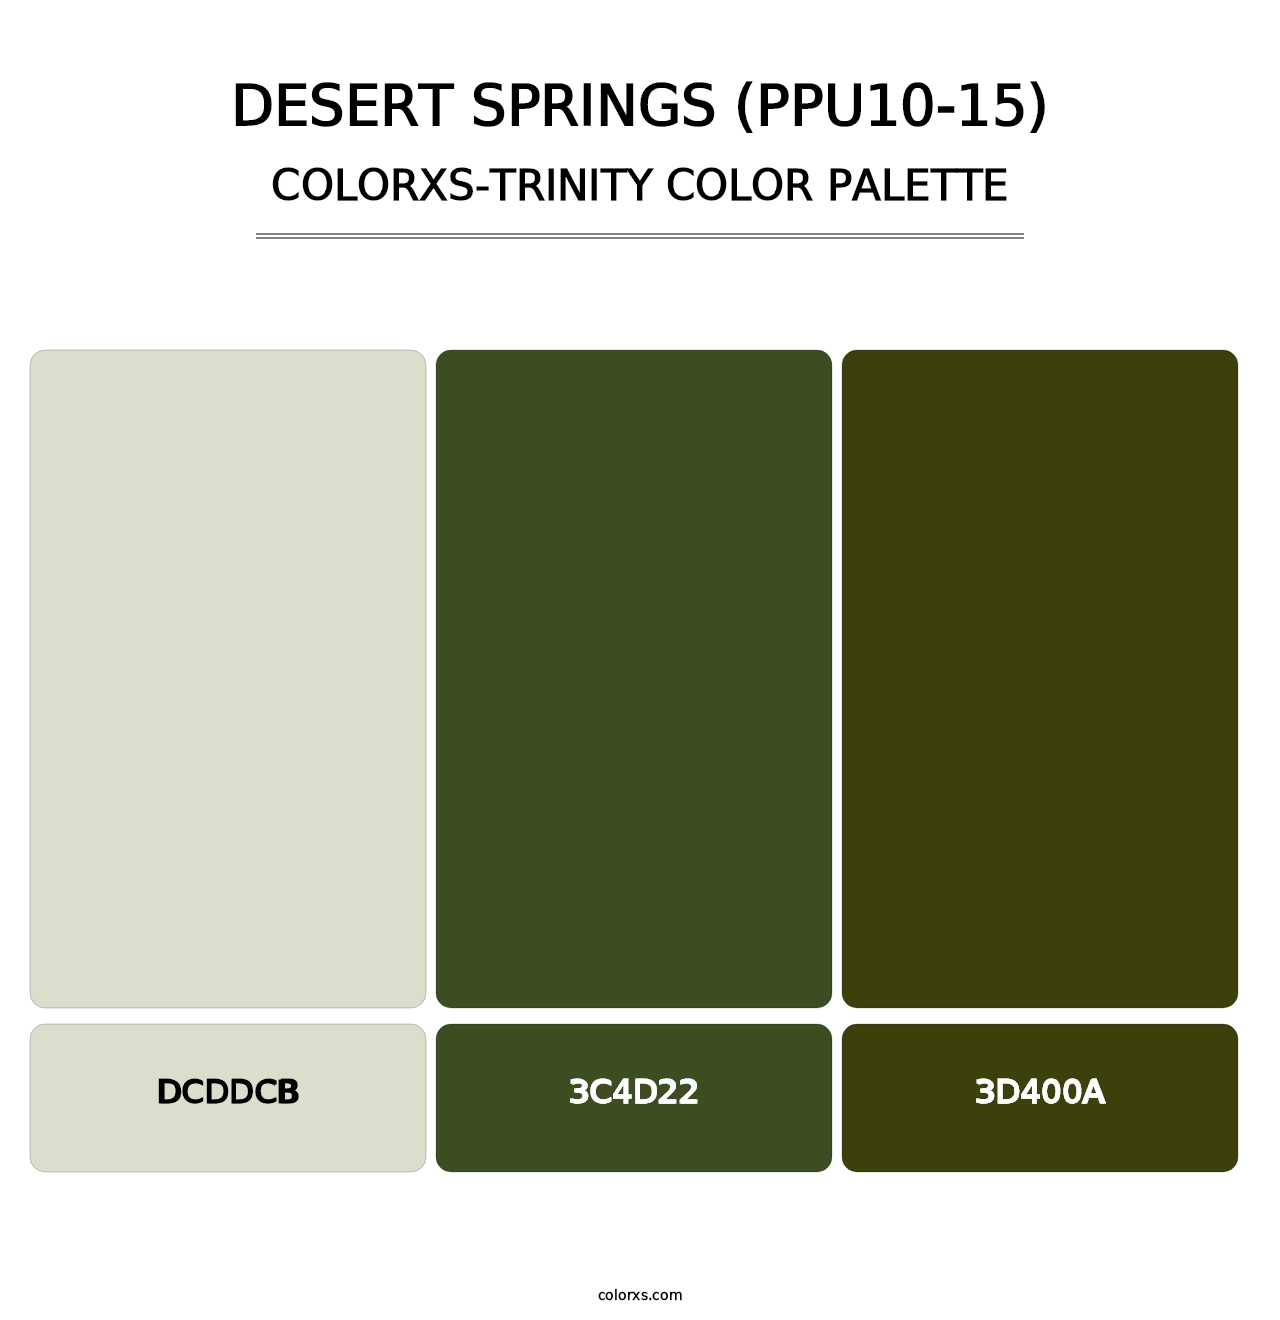 Desert Springs (PPU10-15) - Colorxs Trinity Palette